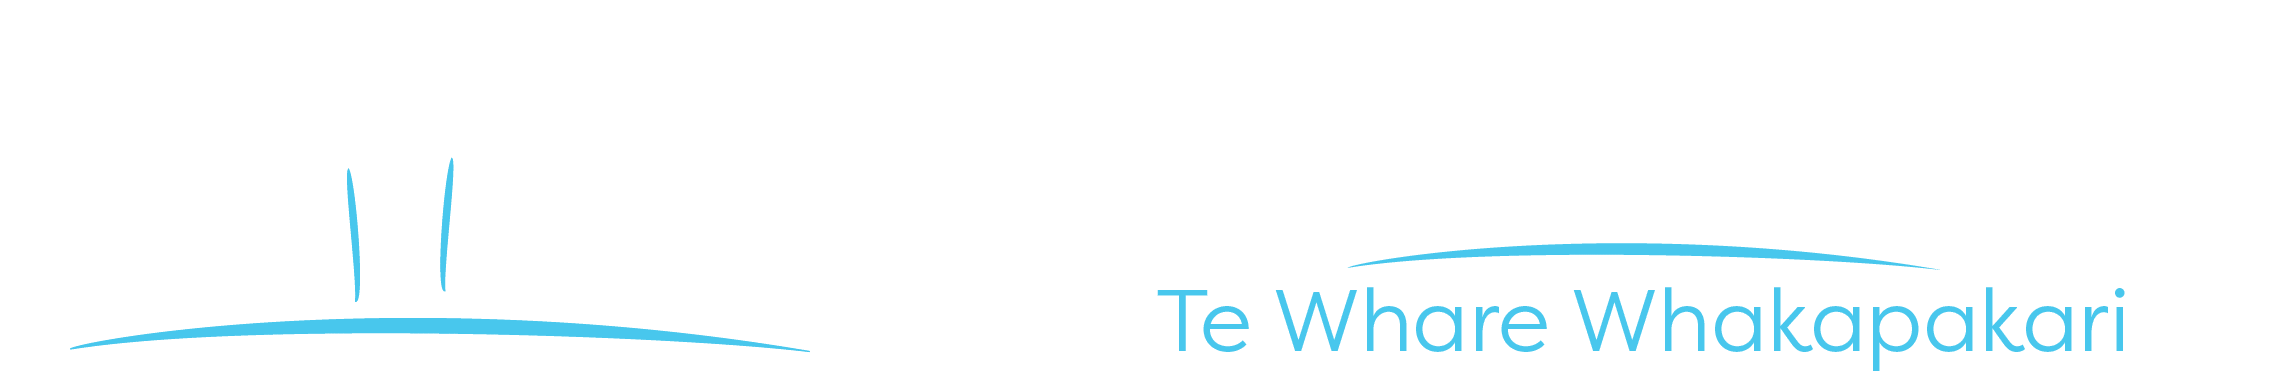 Matamata Indoor Sports and Recreation Hub Logo